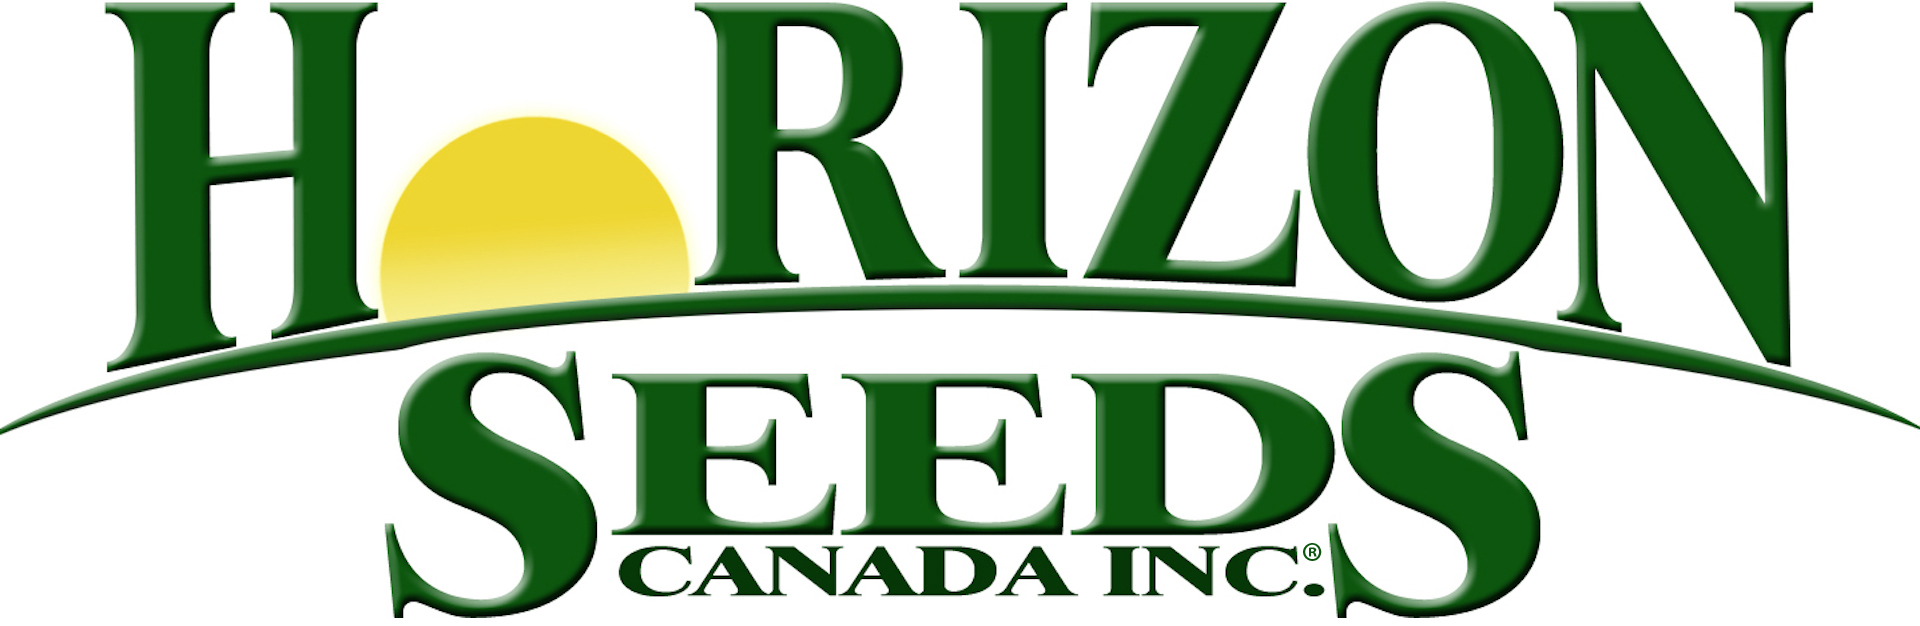 Horizon Seeds Canada Logo